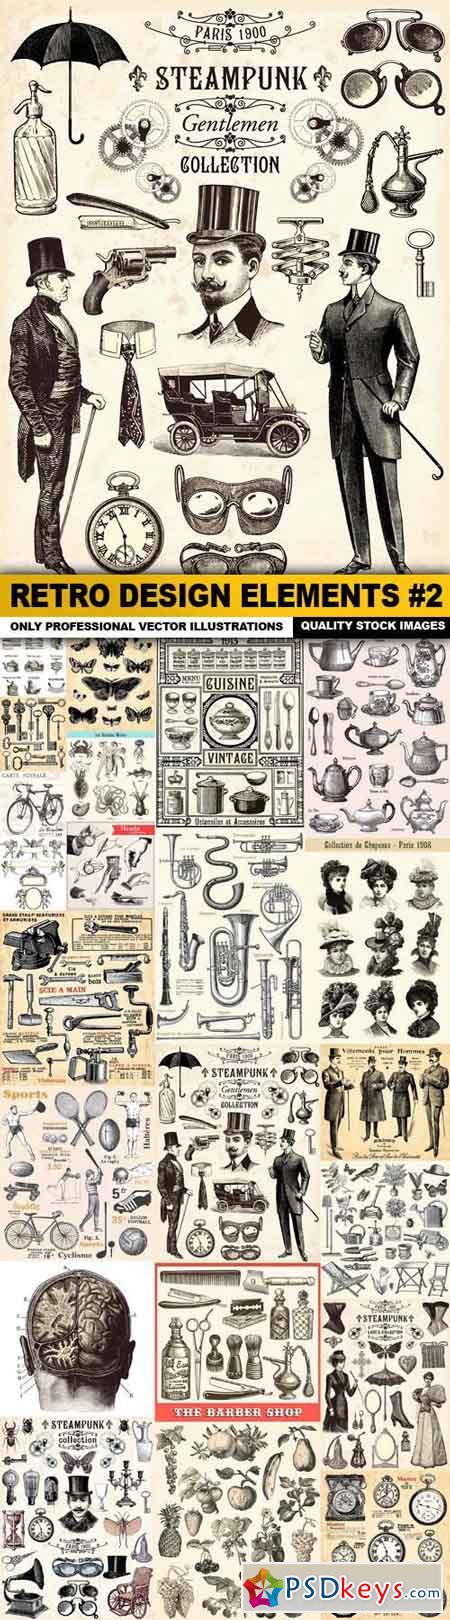 Retro Design Elements #2 - 22 Vector